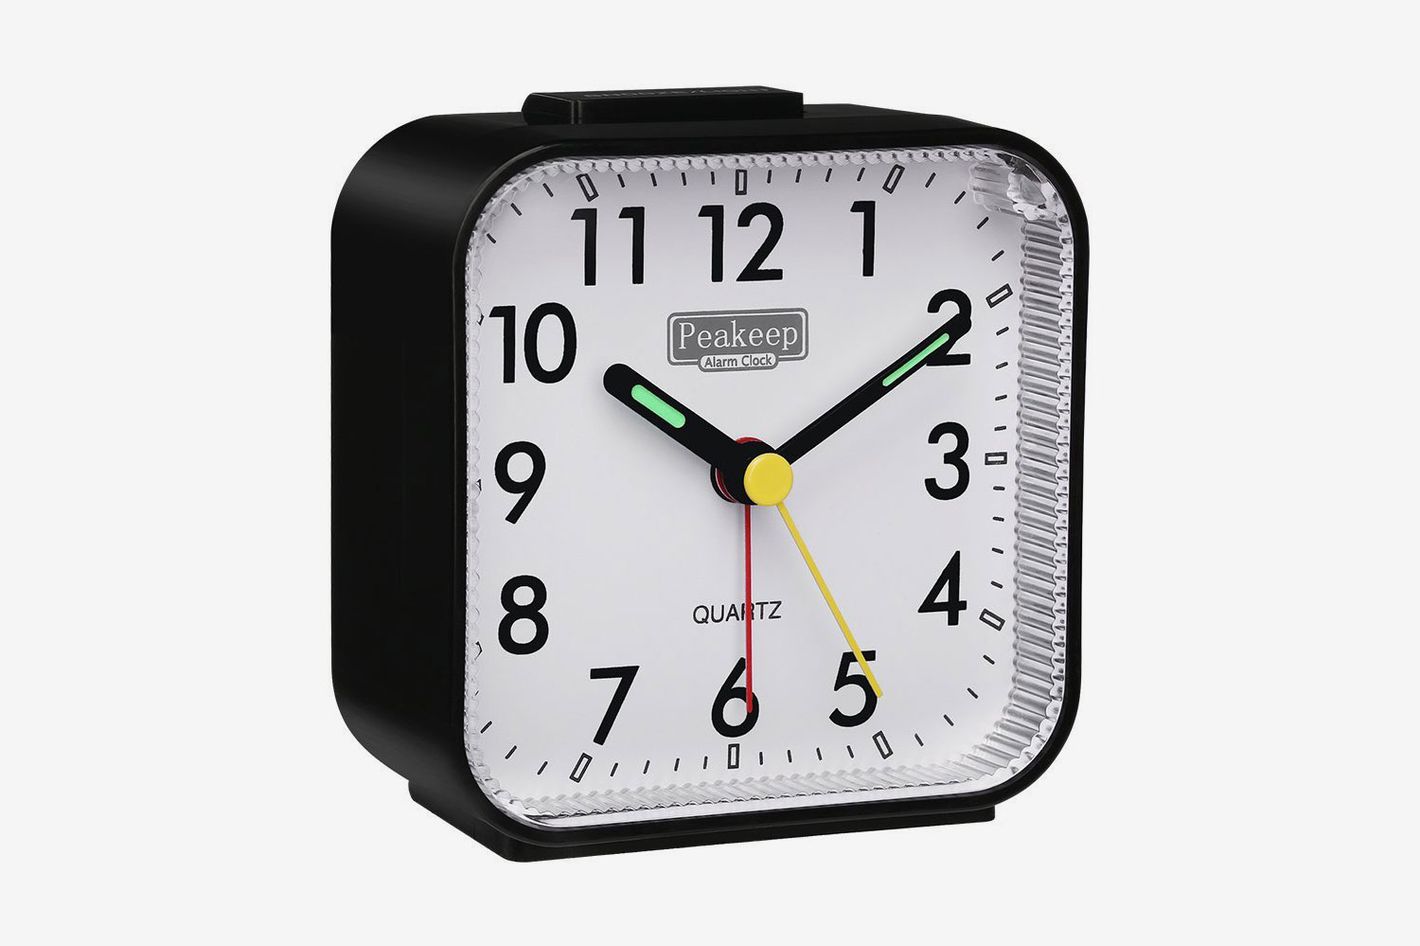 Travel Alarm Clock Model S White Alarm Clock Snooze Light Small Clock//With Battery